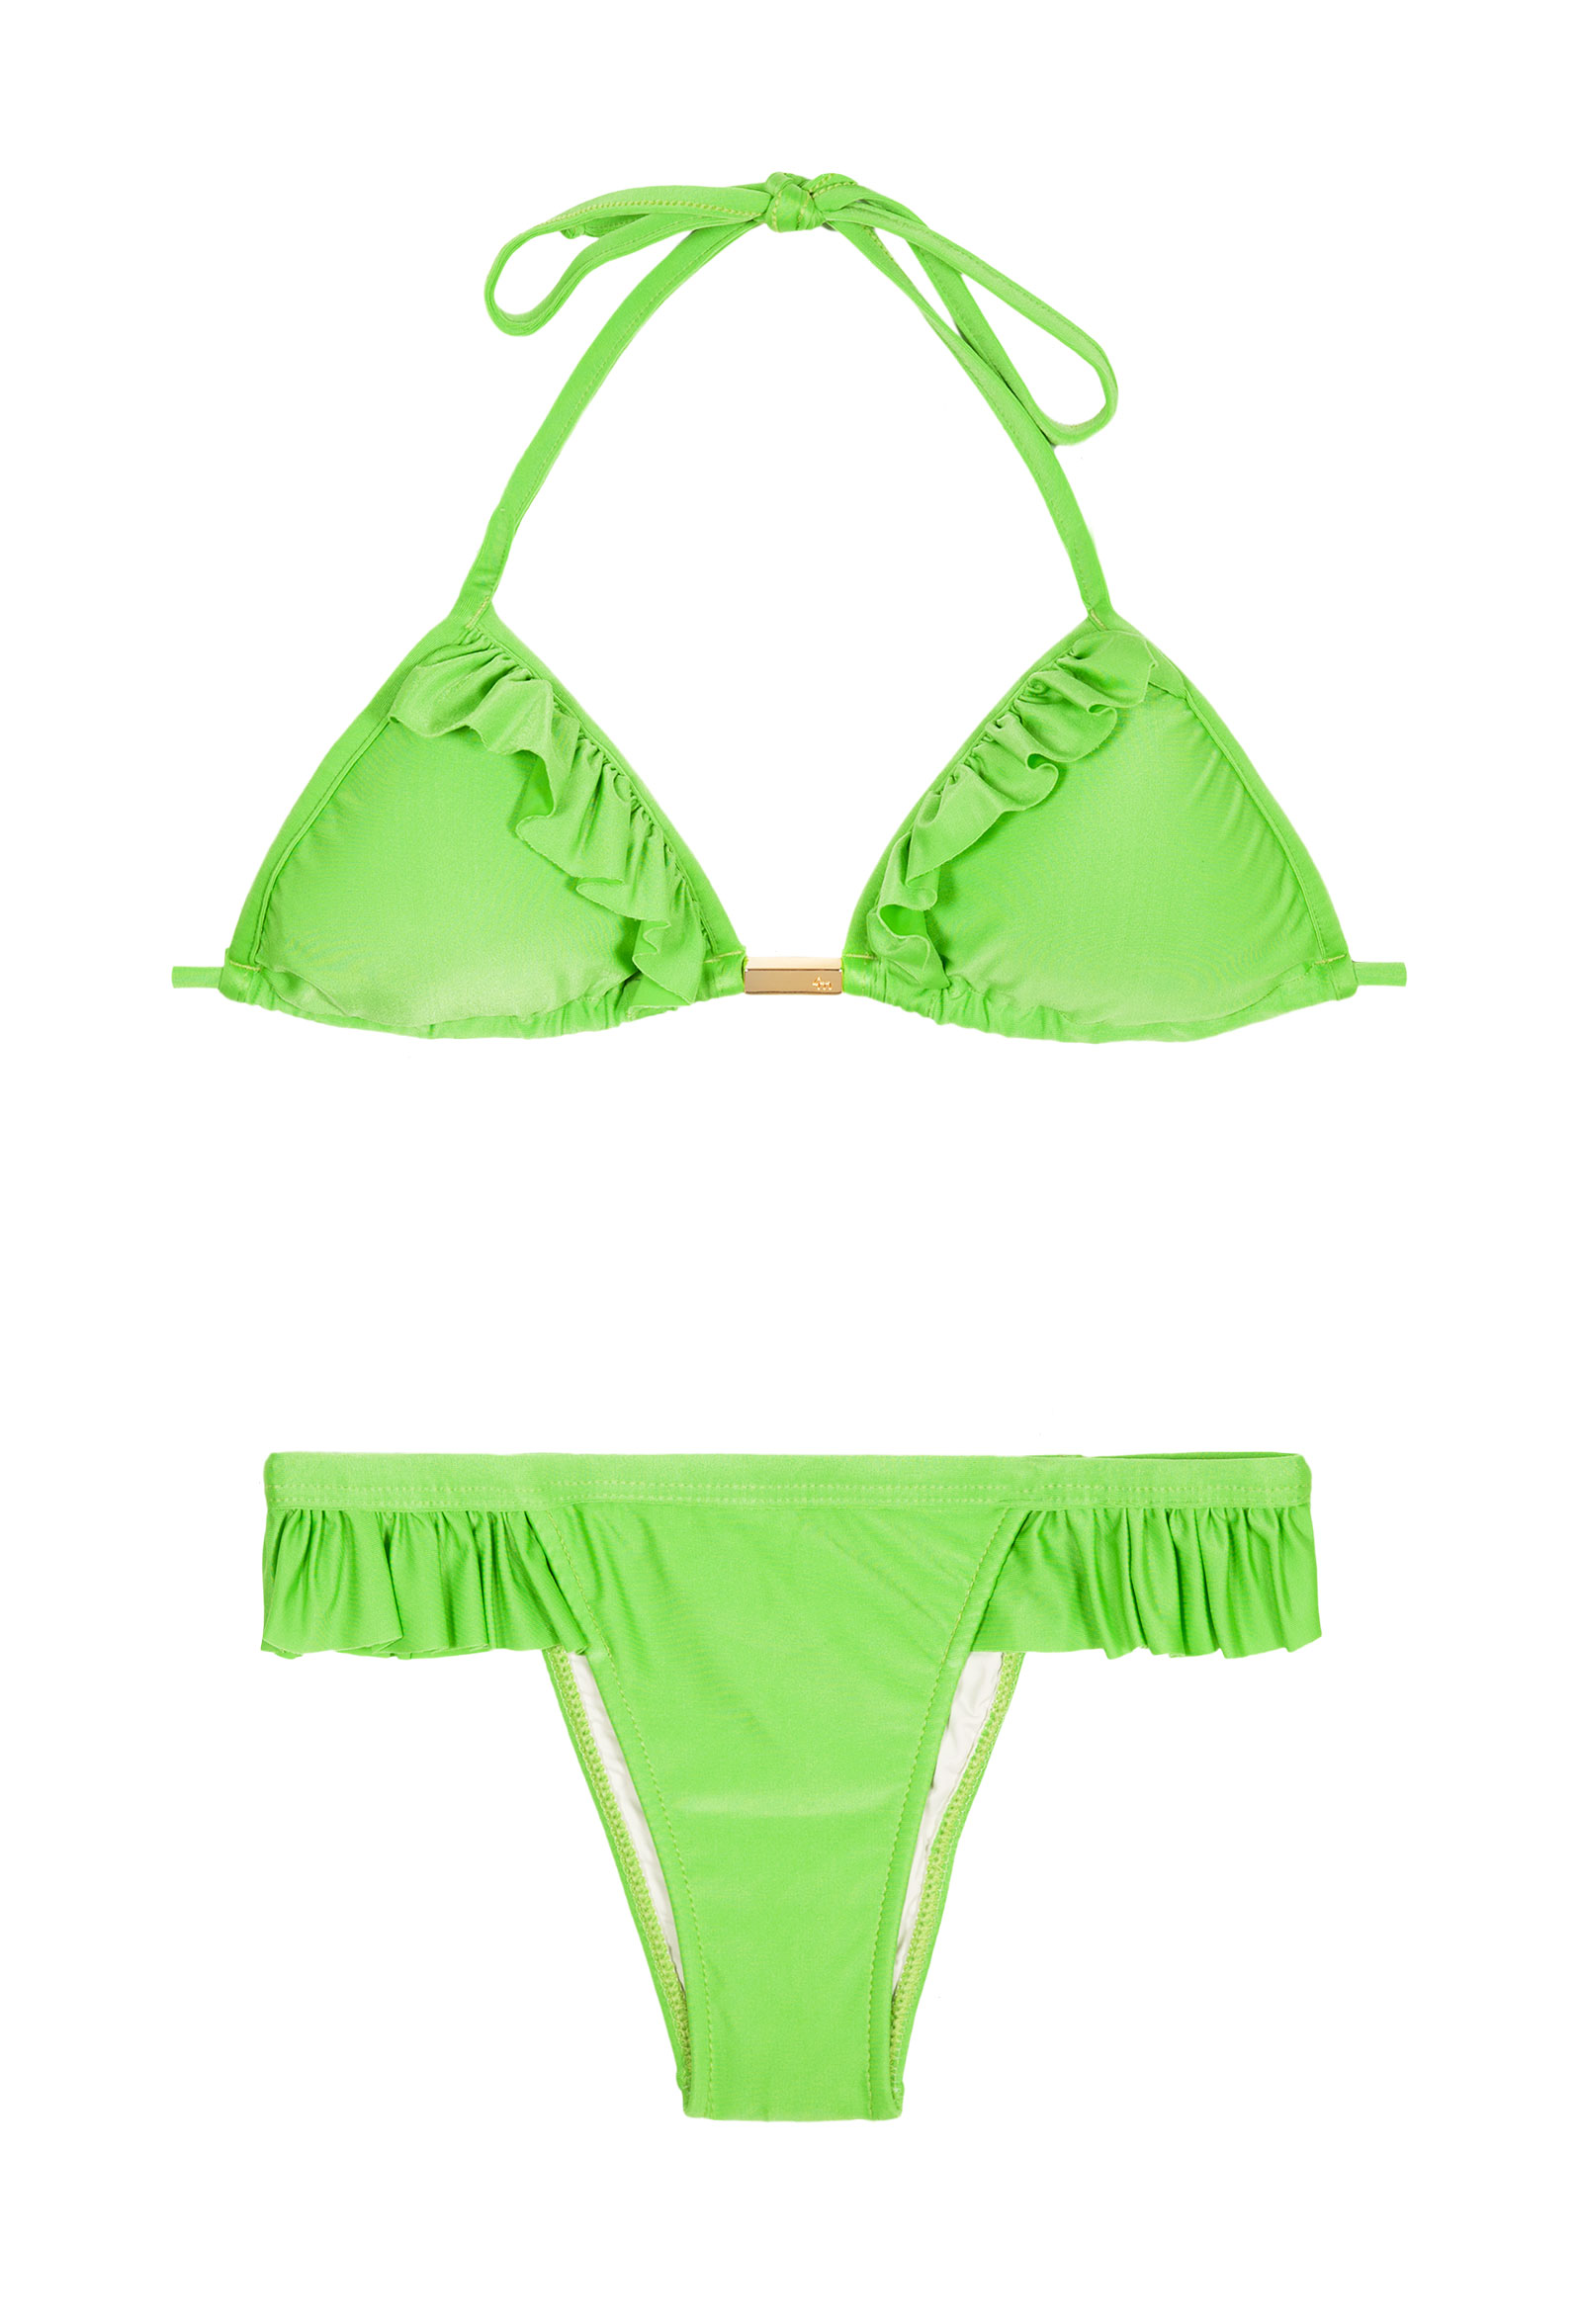 Pale Green Triangle Bikini With Frills Fixed Bottom Girly Light